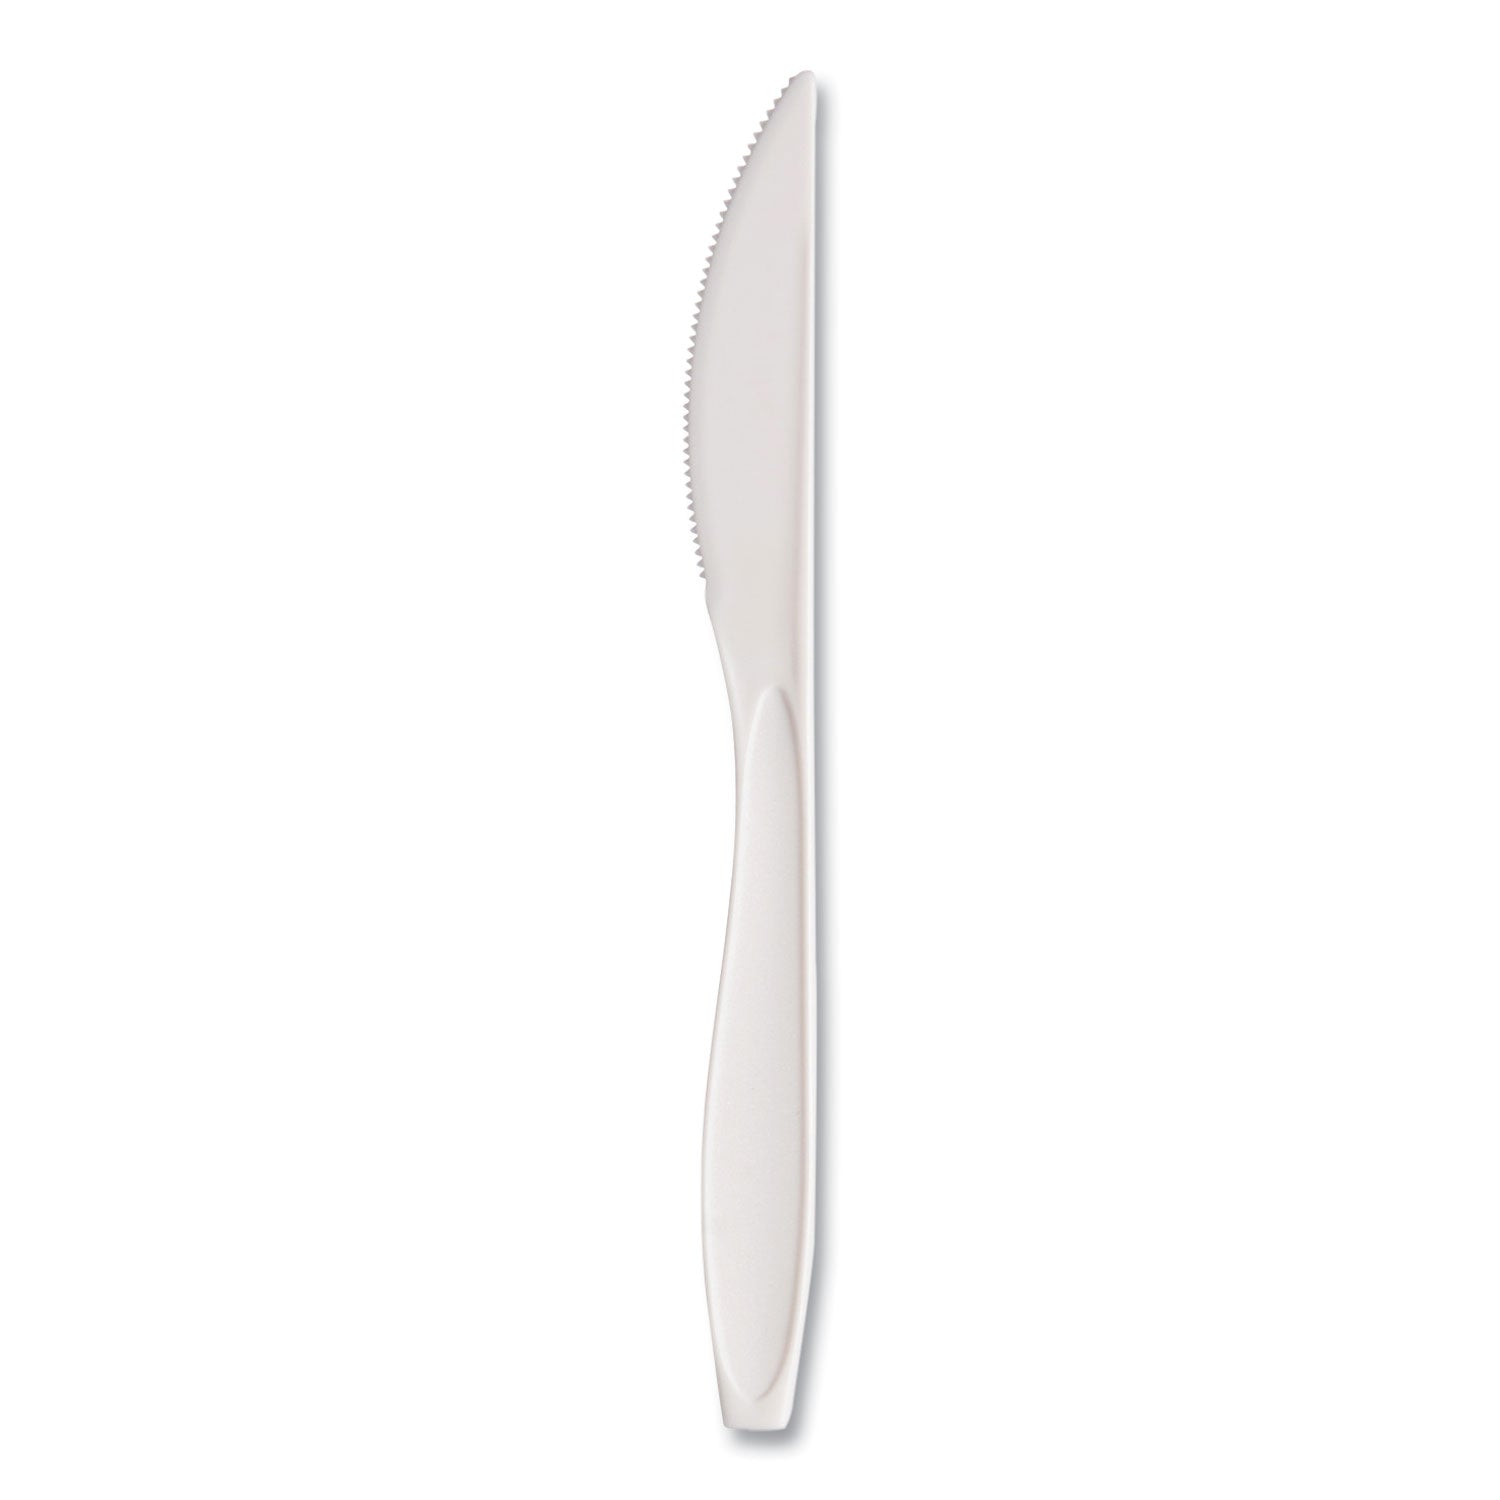 reliance-mediumweight-cutlery-standard-size-knife-bulk-white-1000-carton_sccrswk - 1